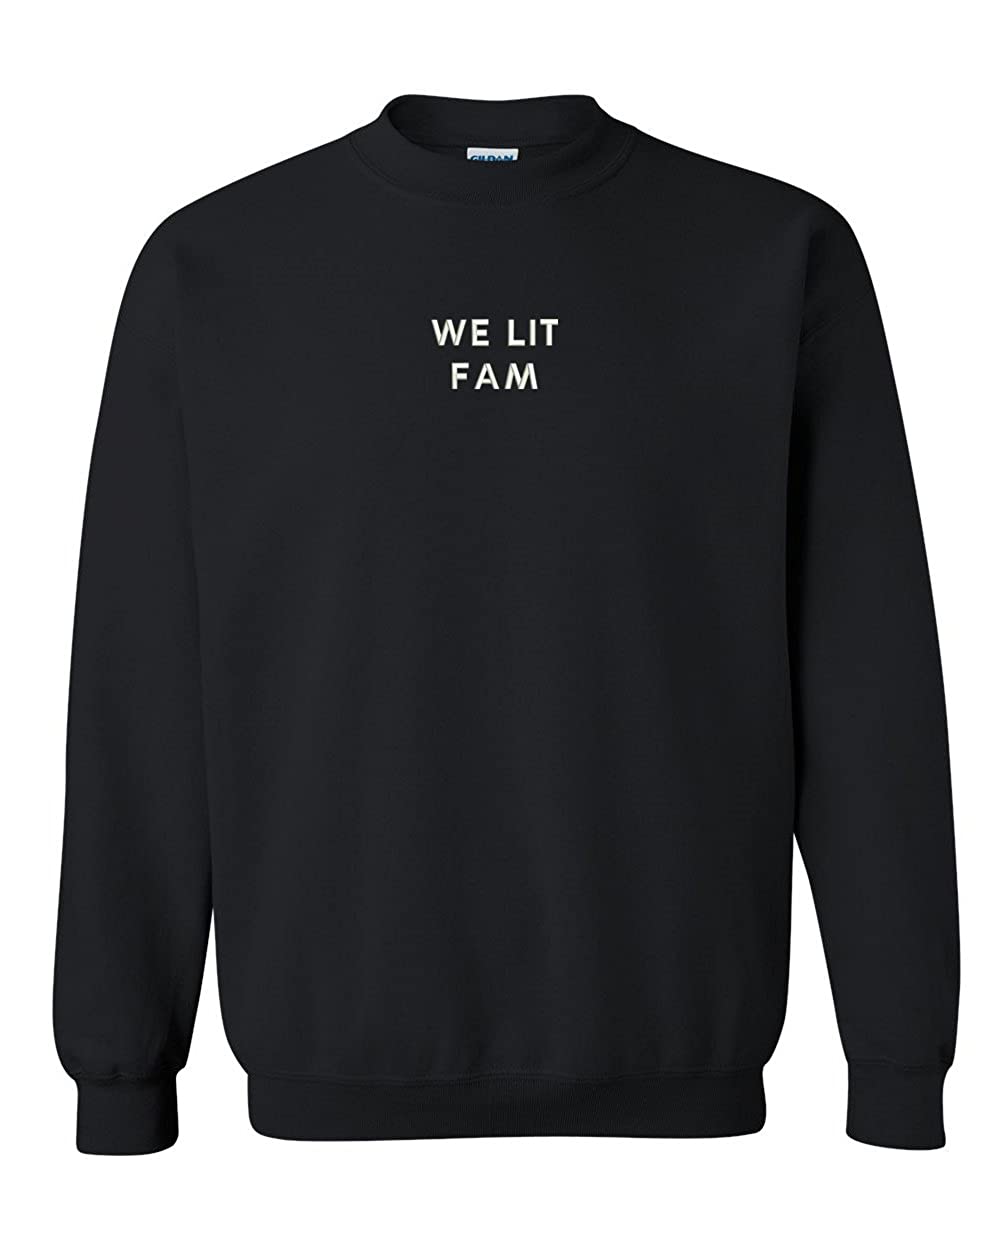 Trendy Apparel Shop LIT Fam Embroidered Crewneck Sweatshirt